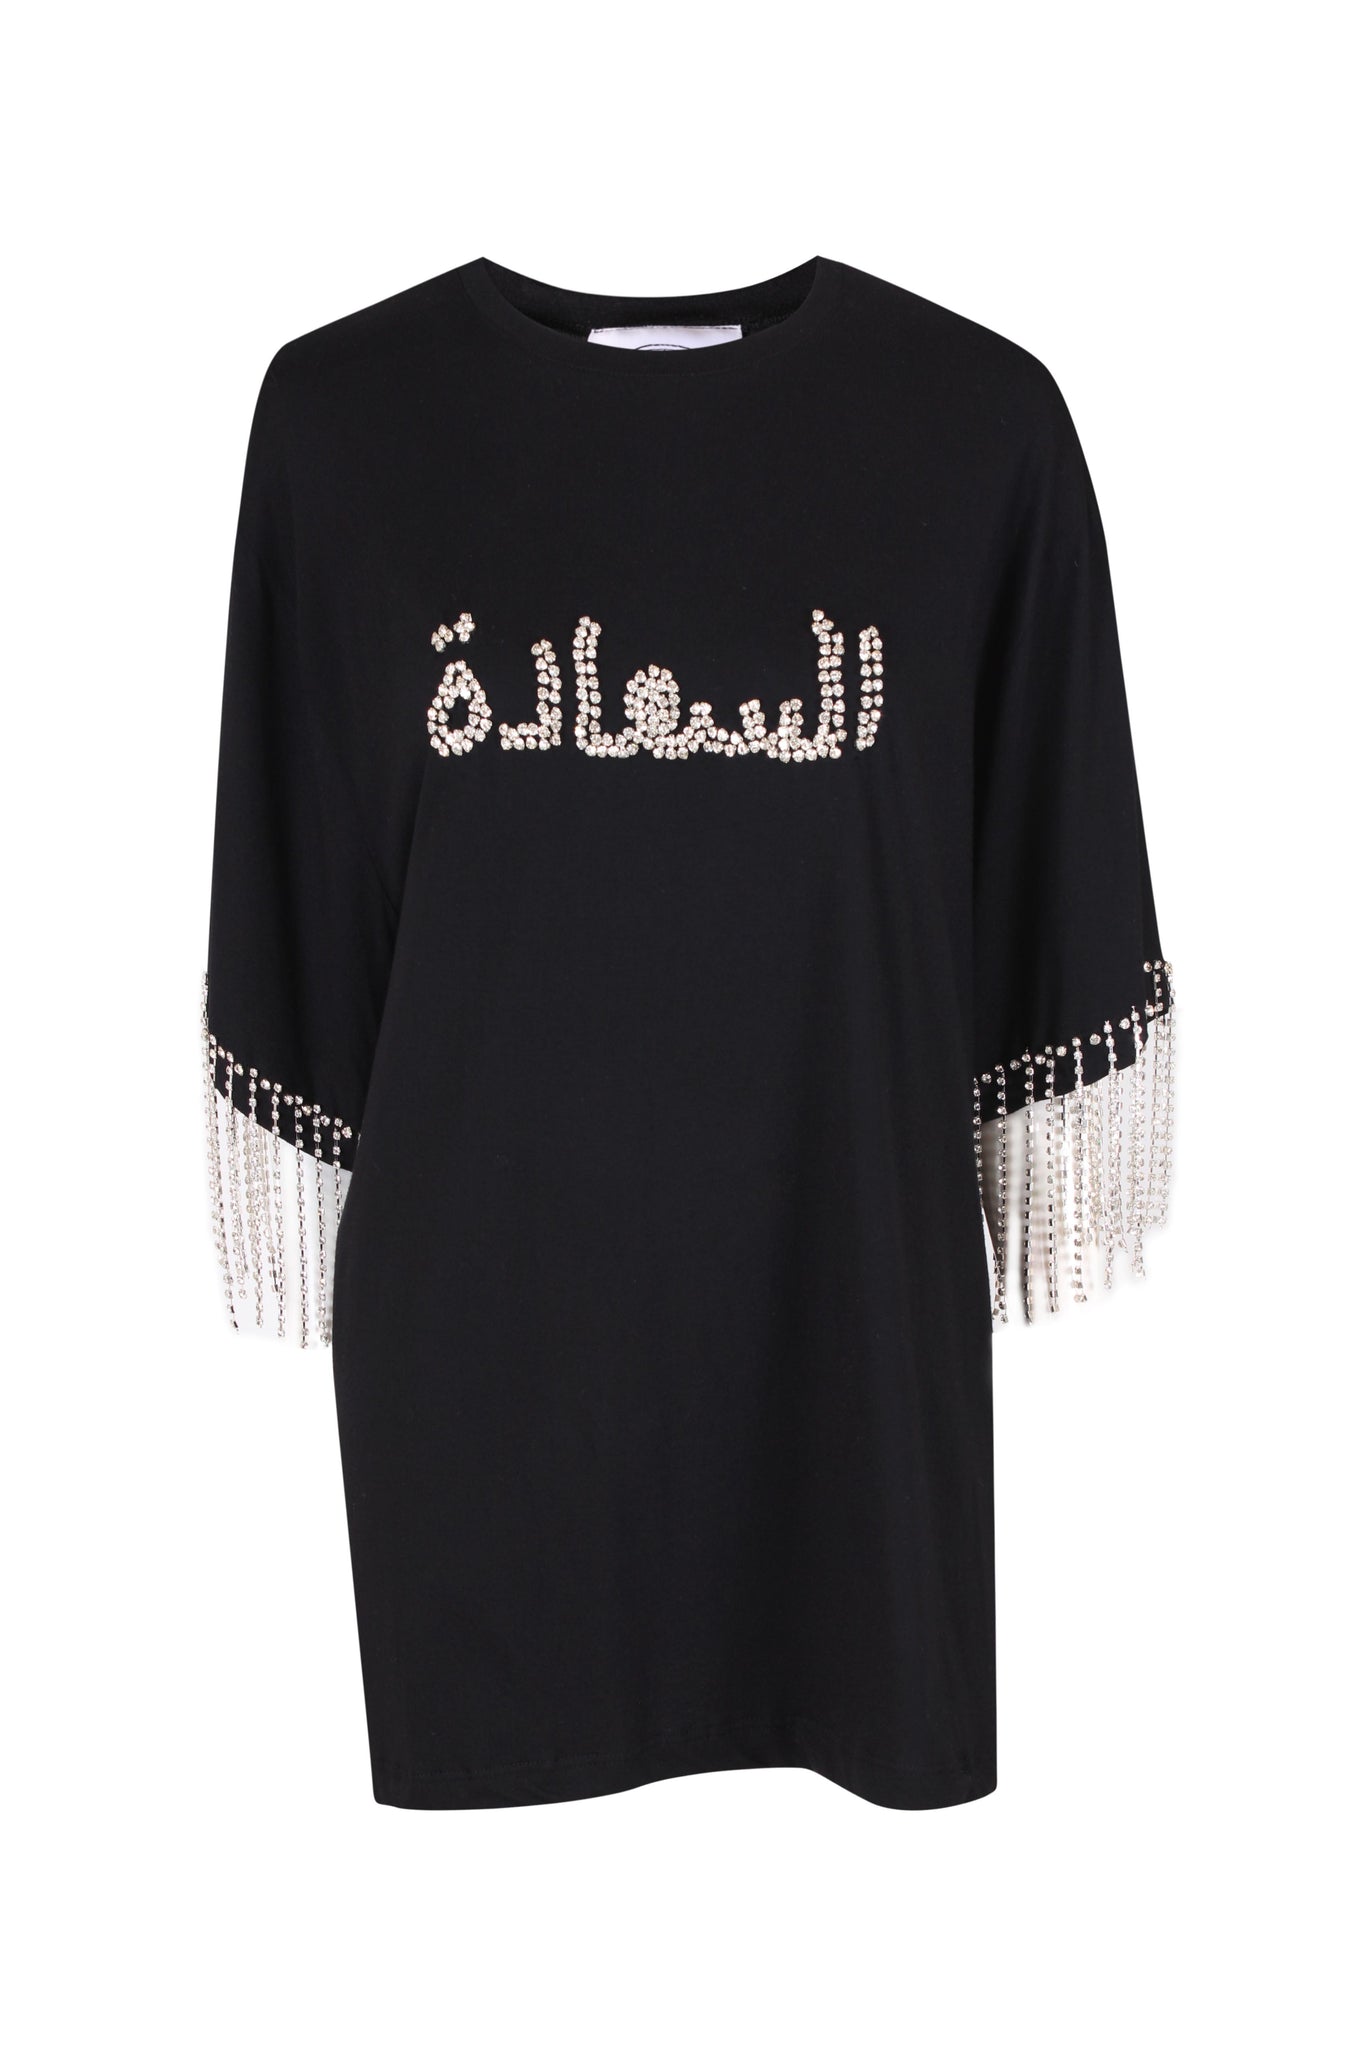 Al Saada T-Shirt